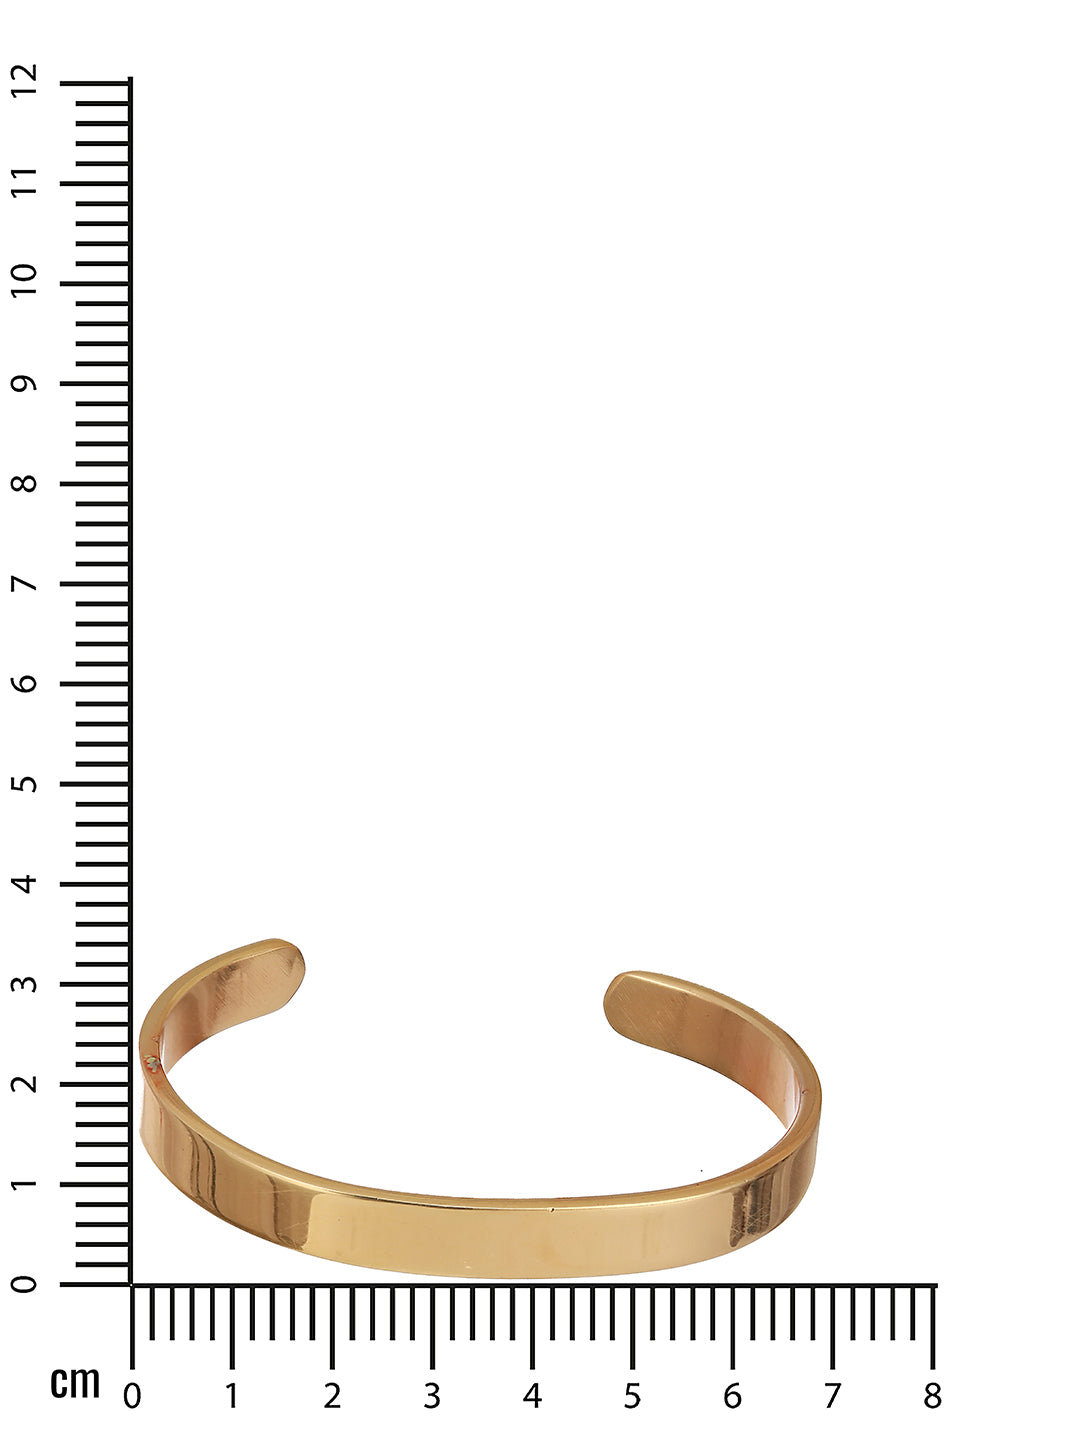 Men Gold-Toned Cuff Bracelet - Jazzandsizzle